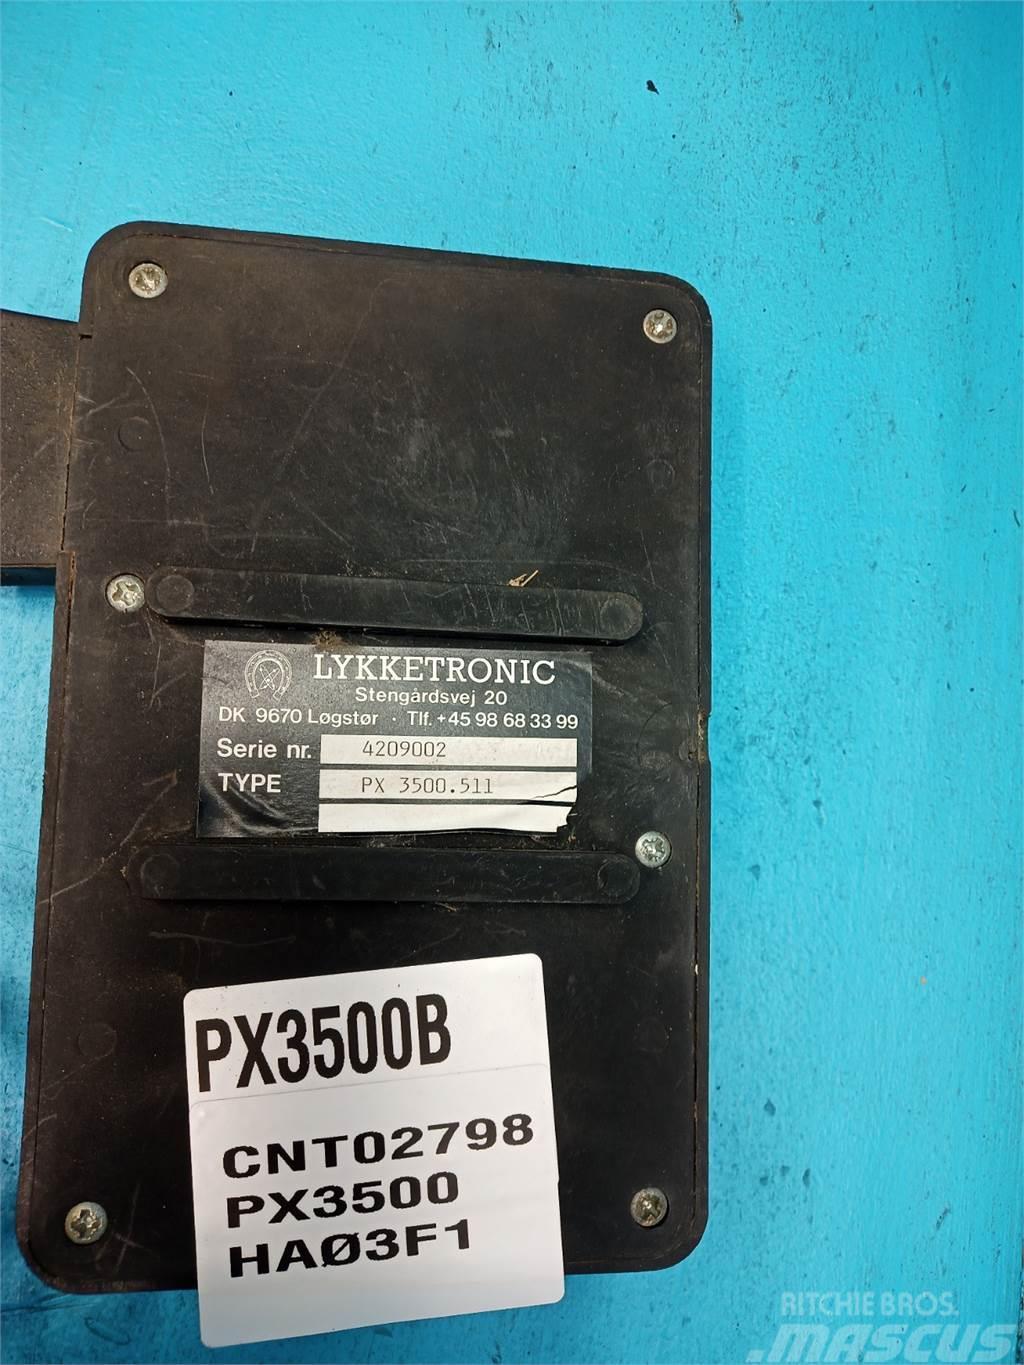  Lykketronic PX3500 Electronice